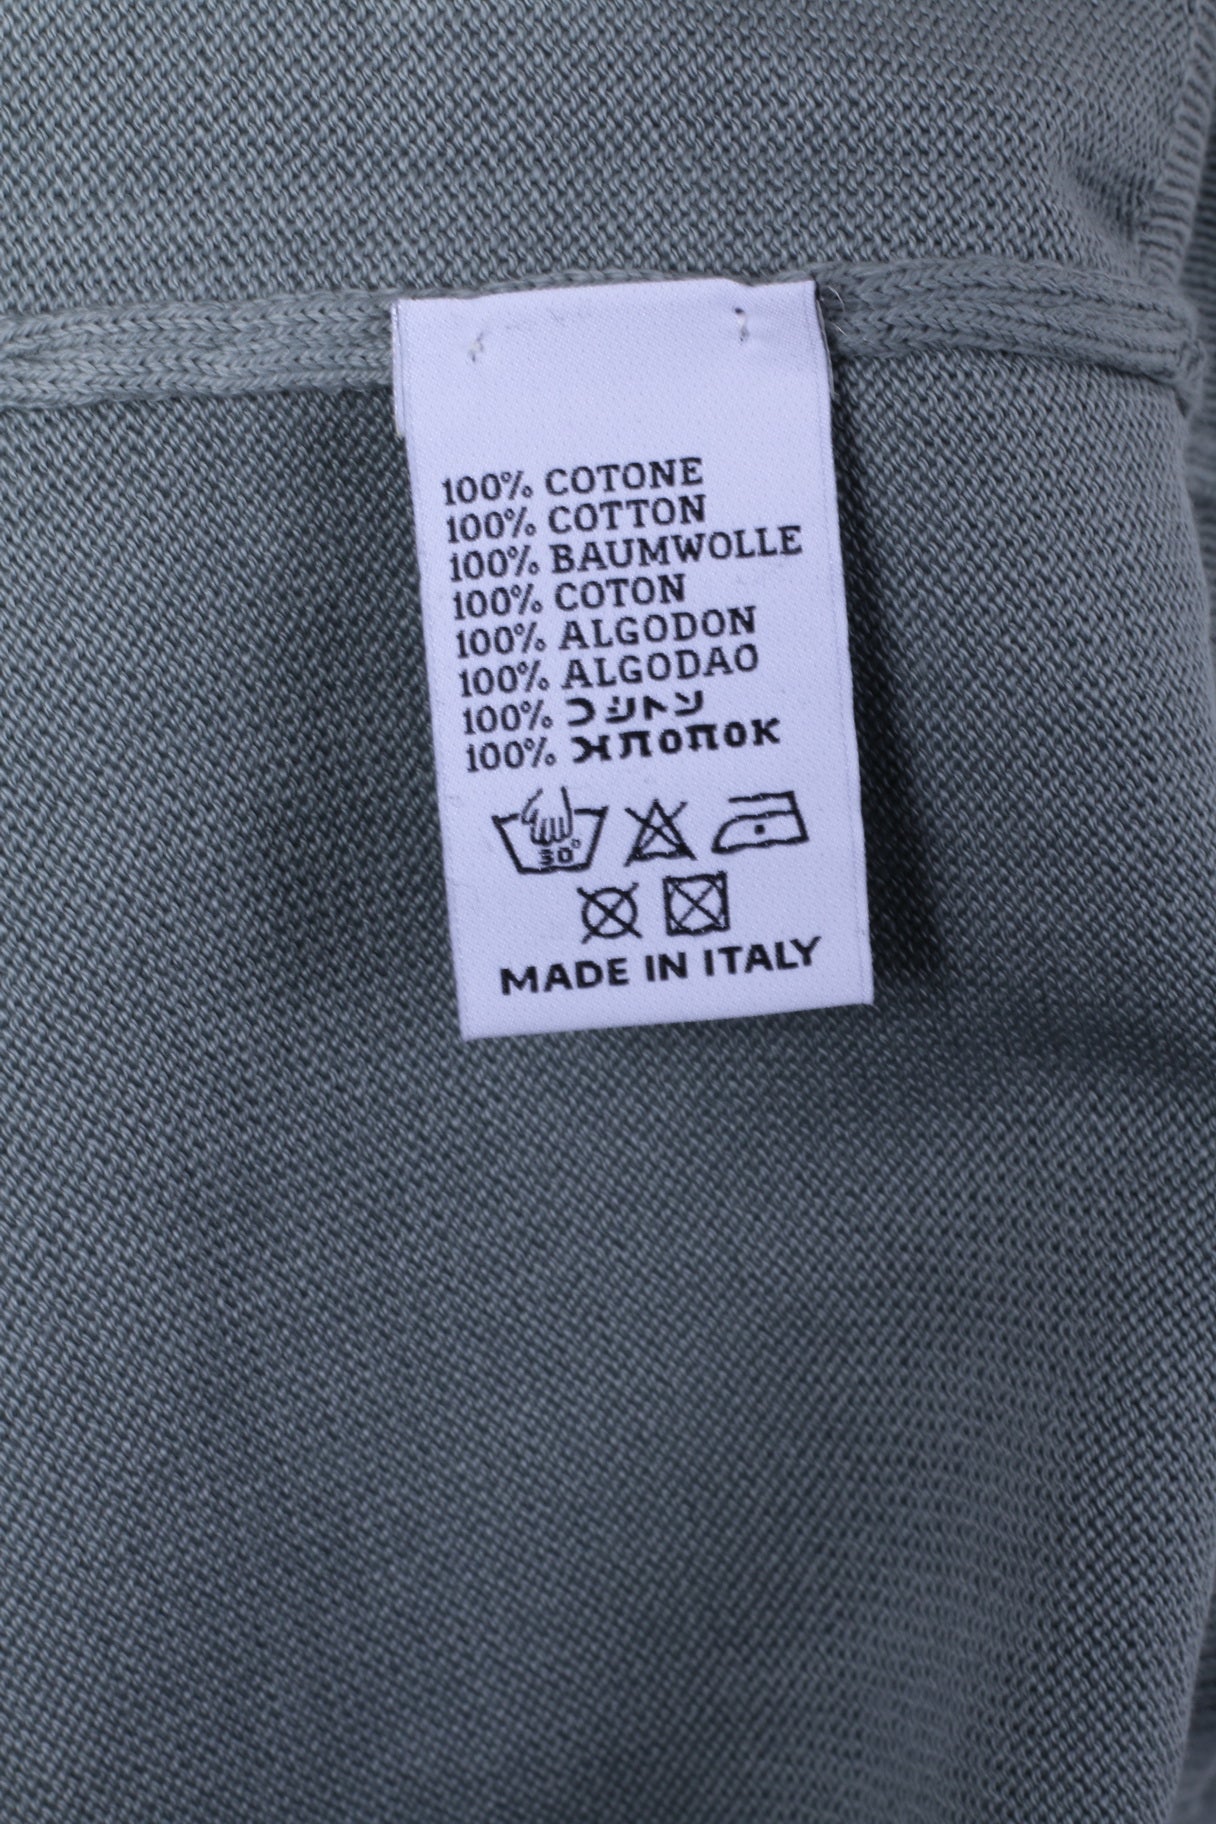 Della Ciana New Vintage Men 56 XL Jumper Grey Cotton Made in Italy Sweater